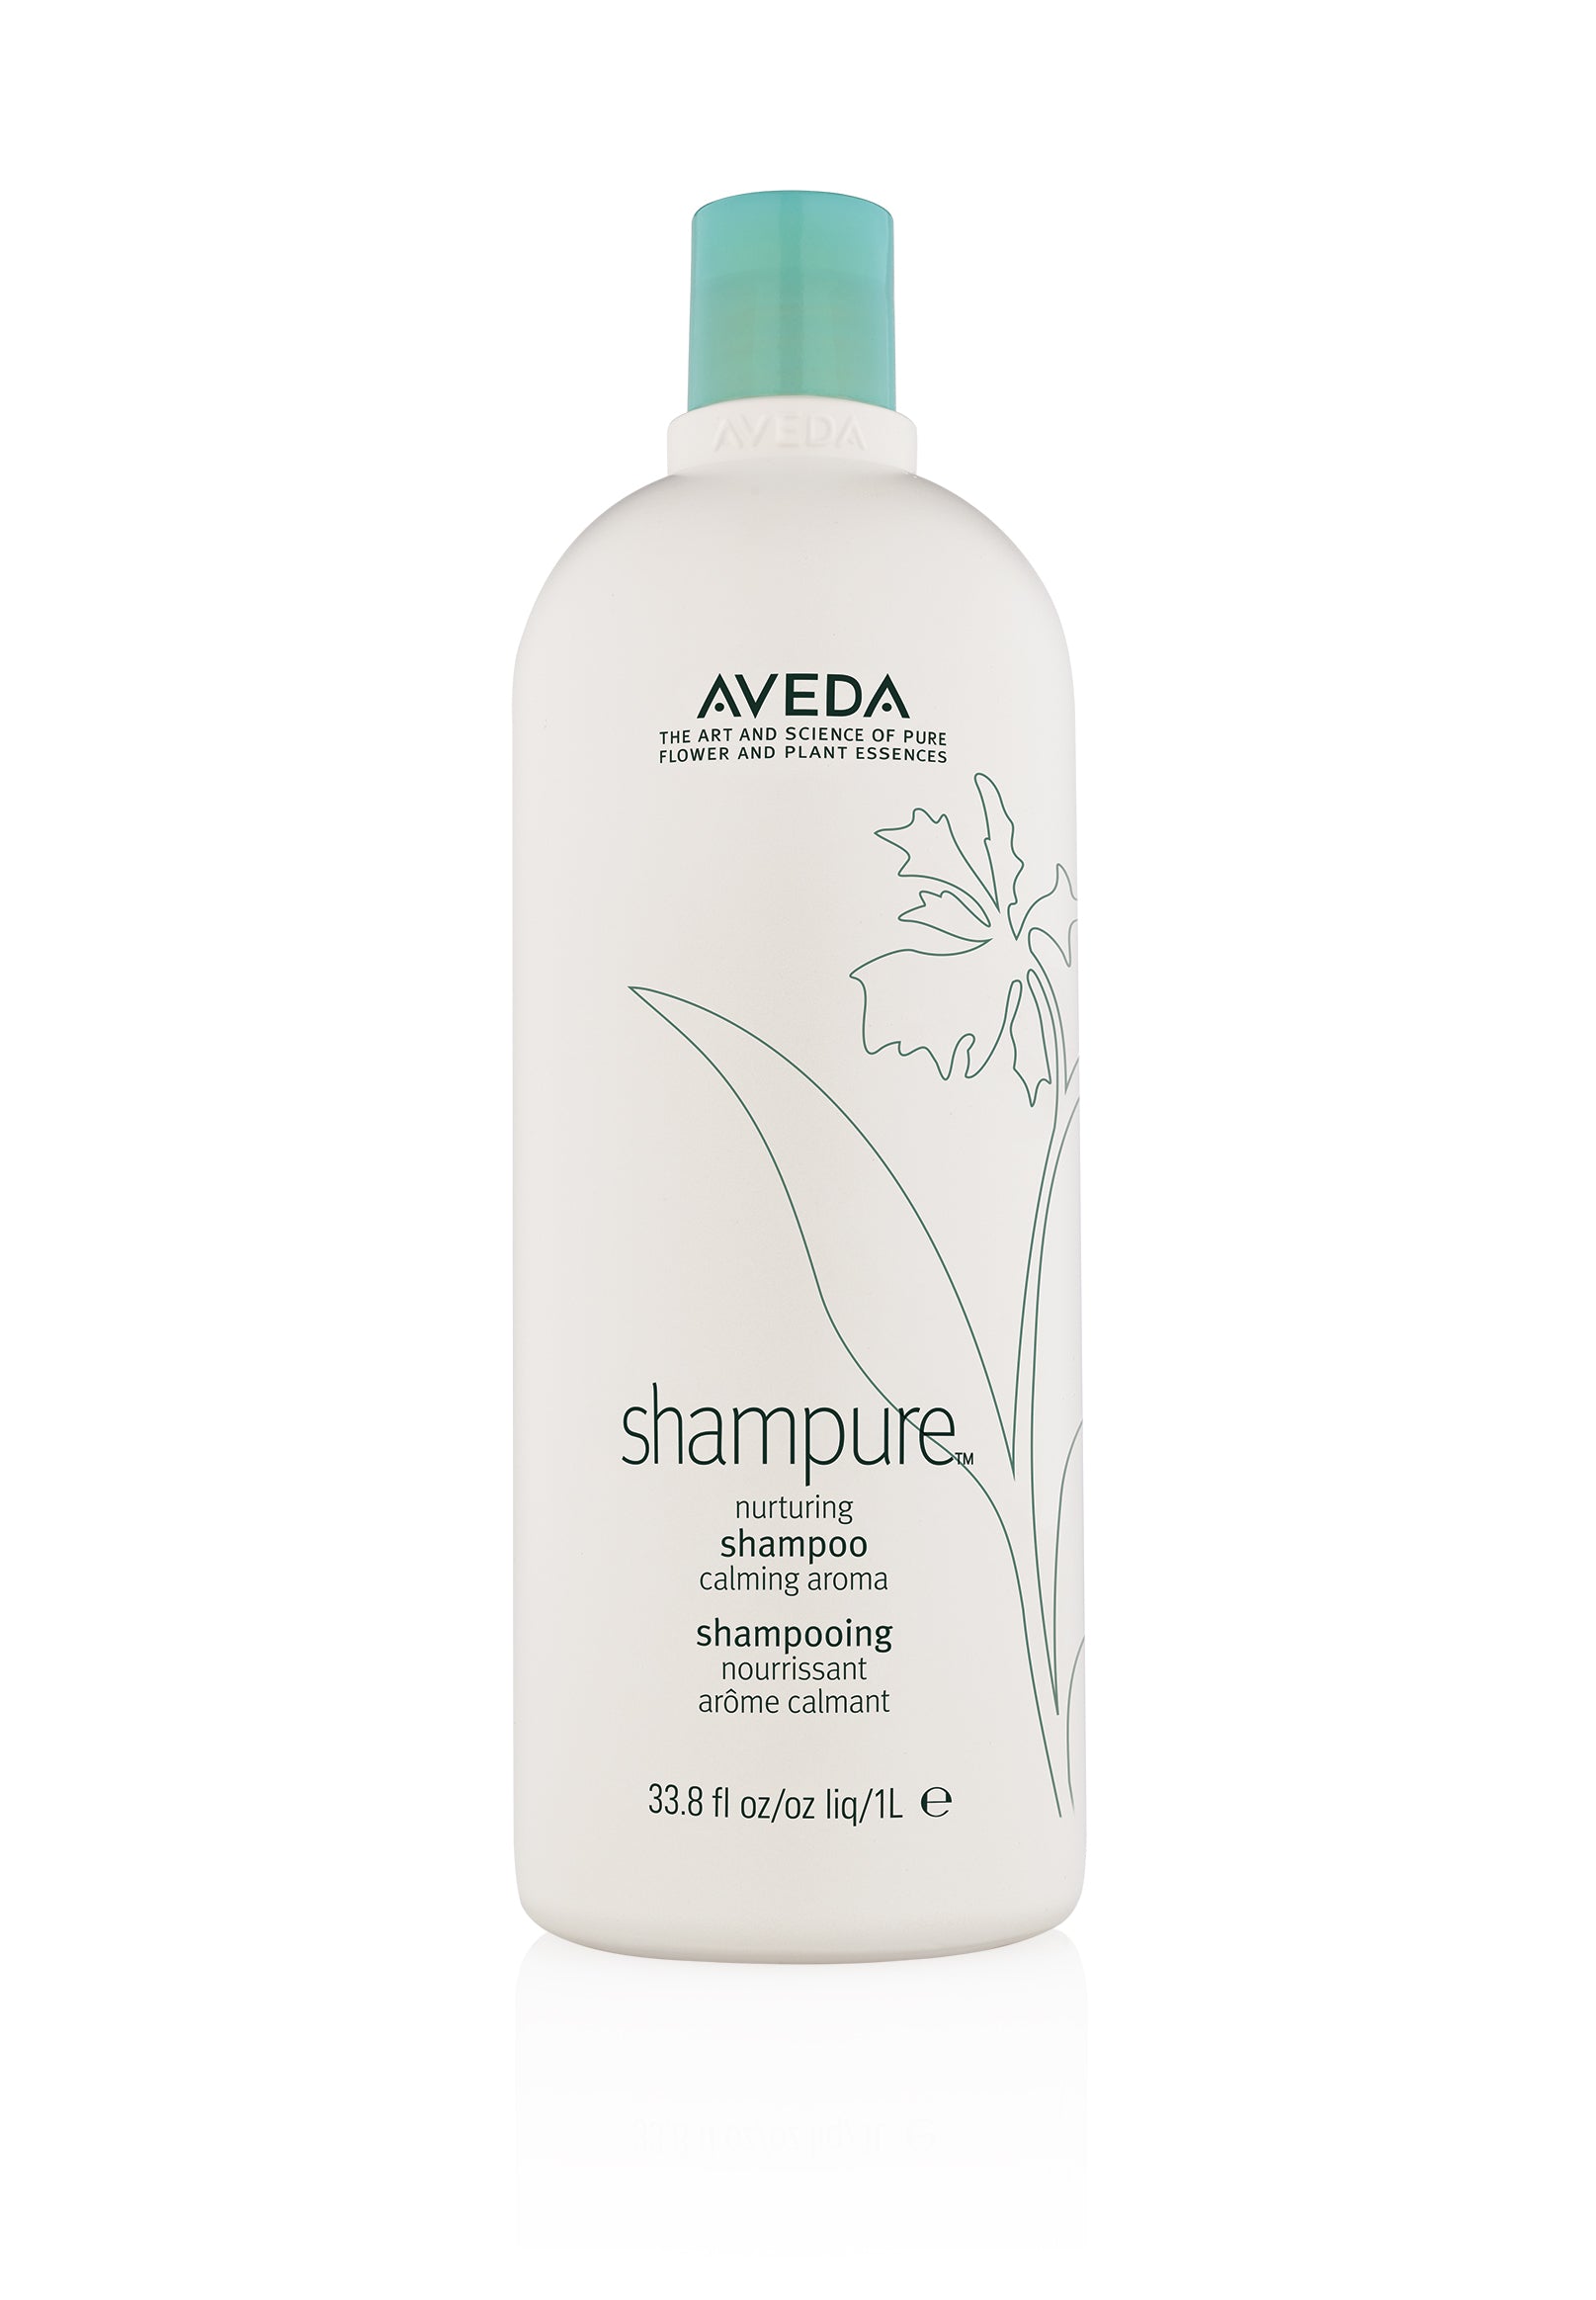 Aveda Shampure Shampoo 1 Litre